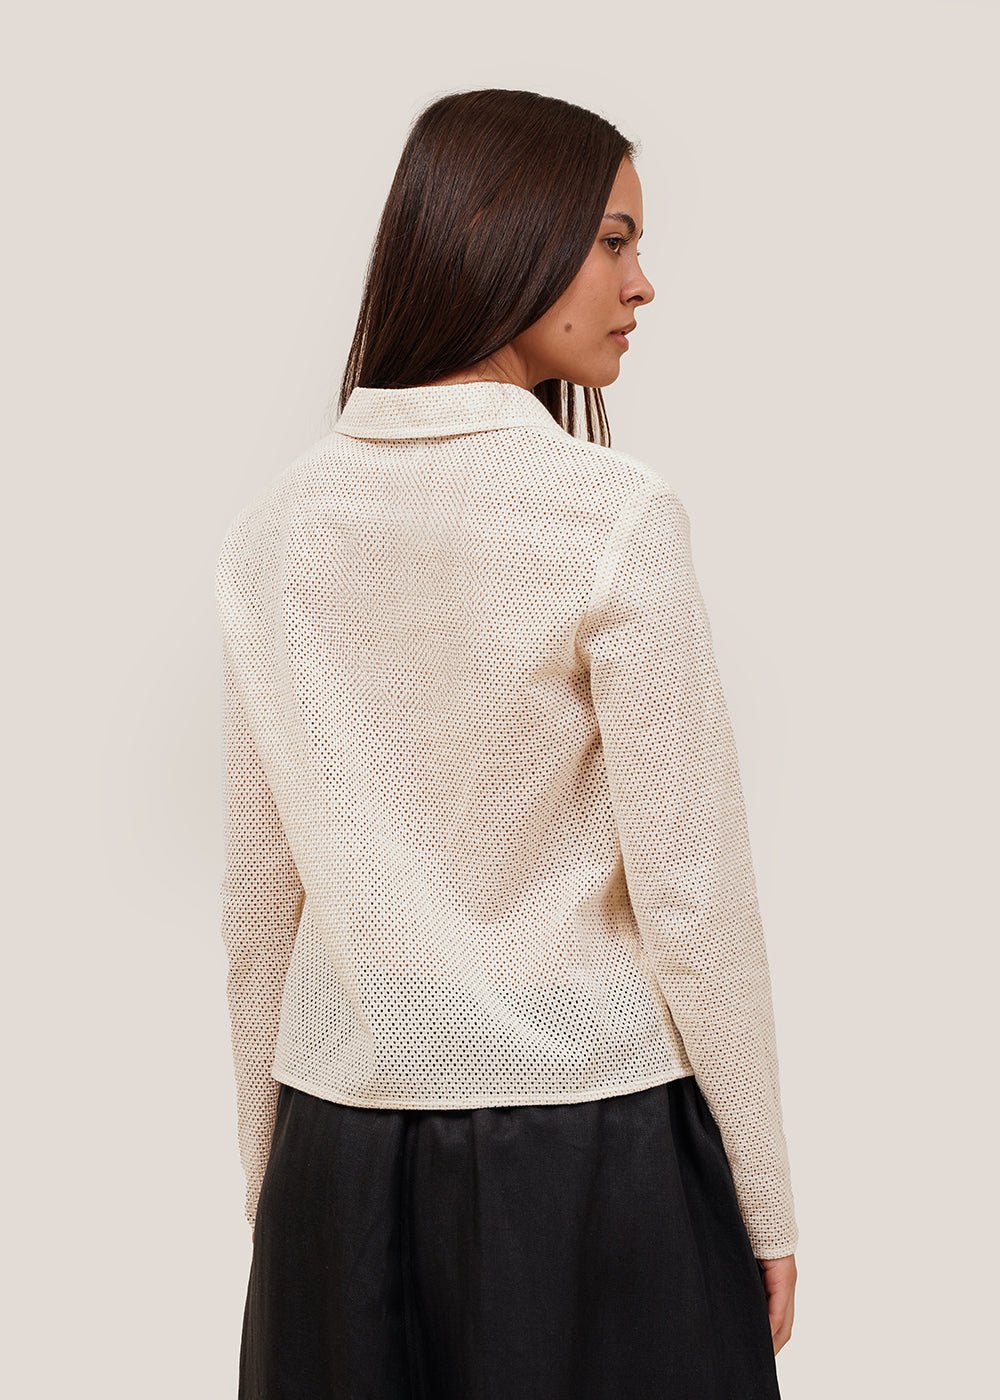 AMOMENTO Ecru Crochet Long-Sleeve Shirt - New Classics Studios Sustainable Ethical Fashion Canada